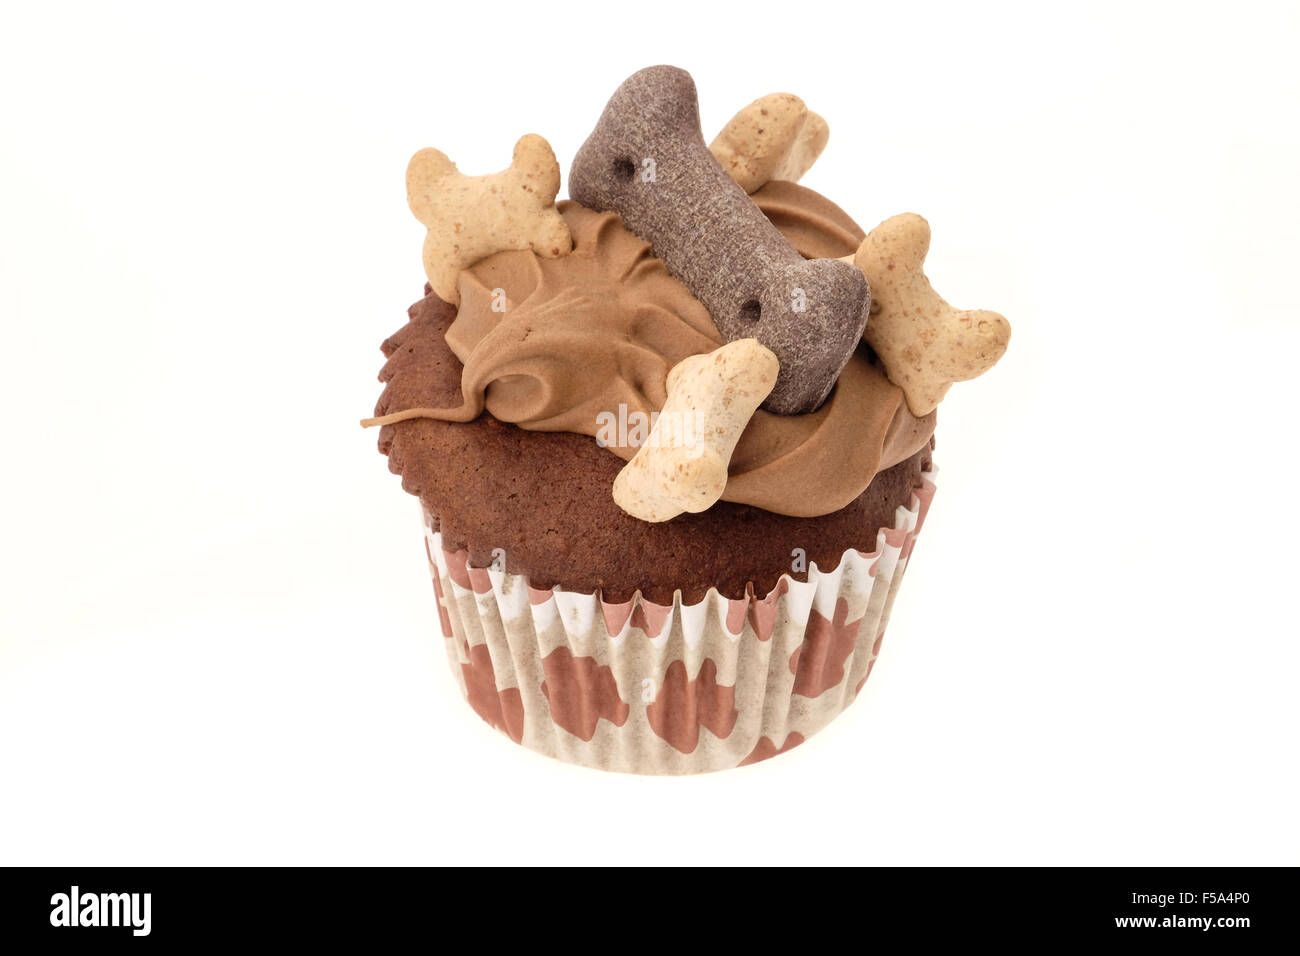 Dog treat muffin cupcake - studio shot with a white background Stock Photo